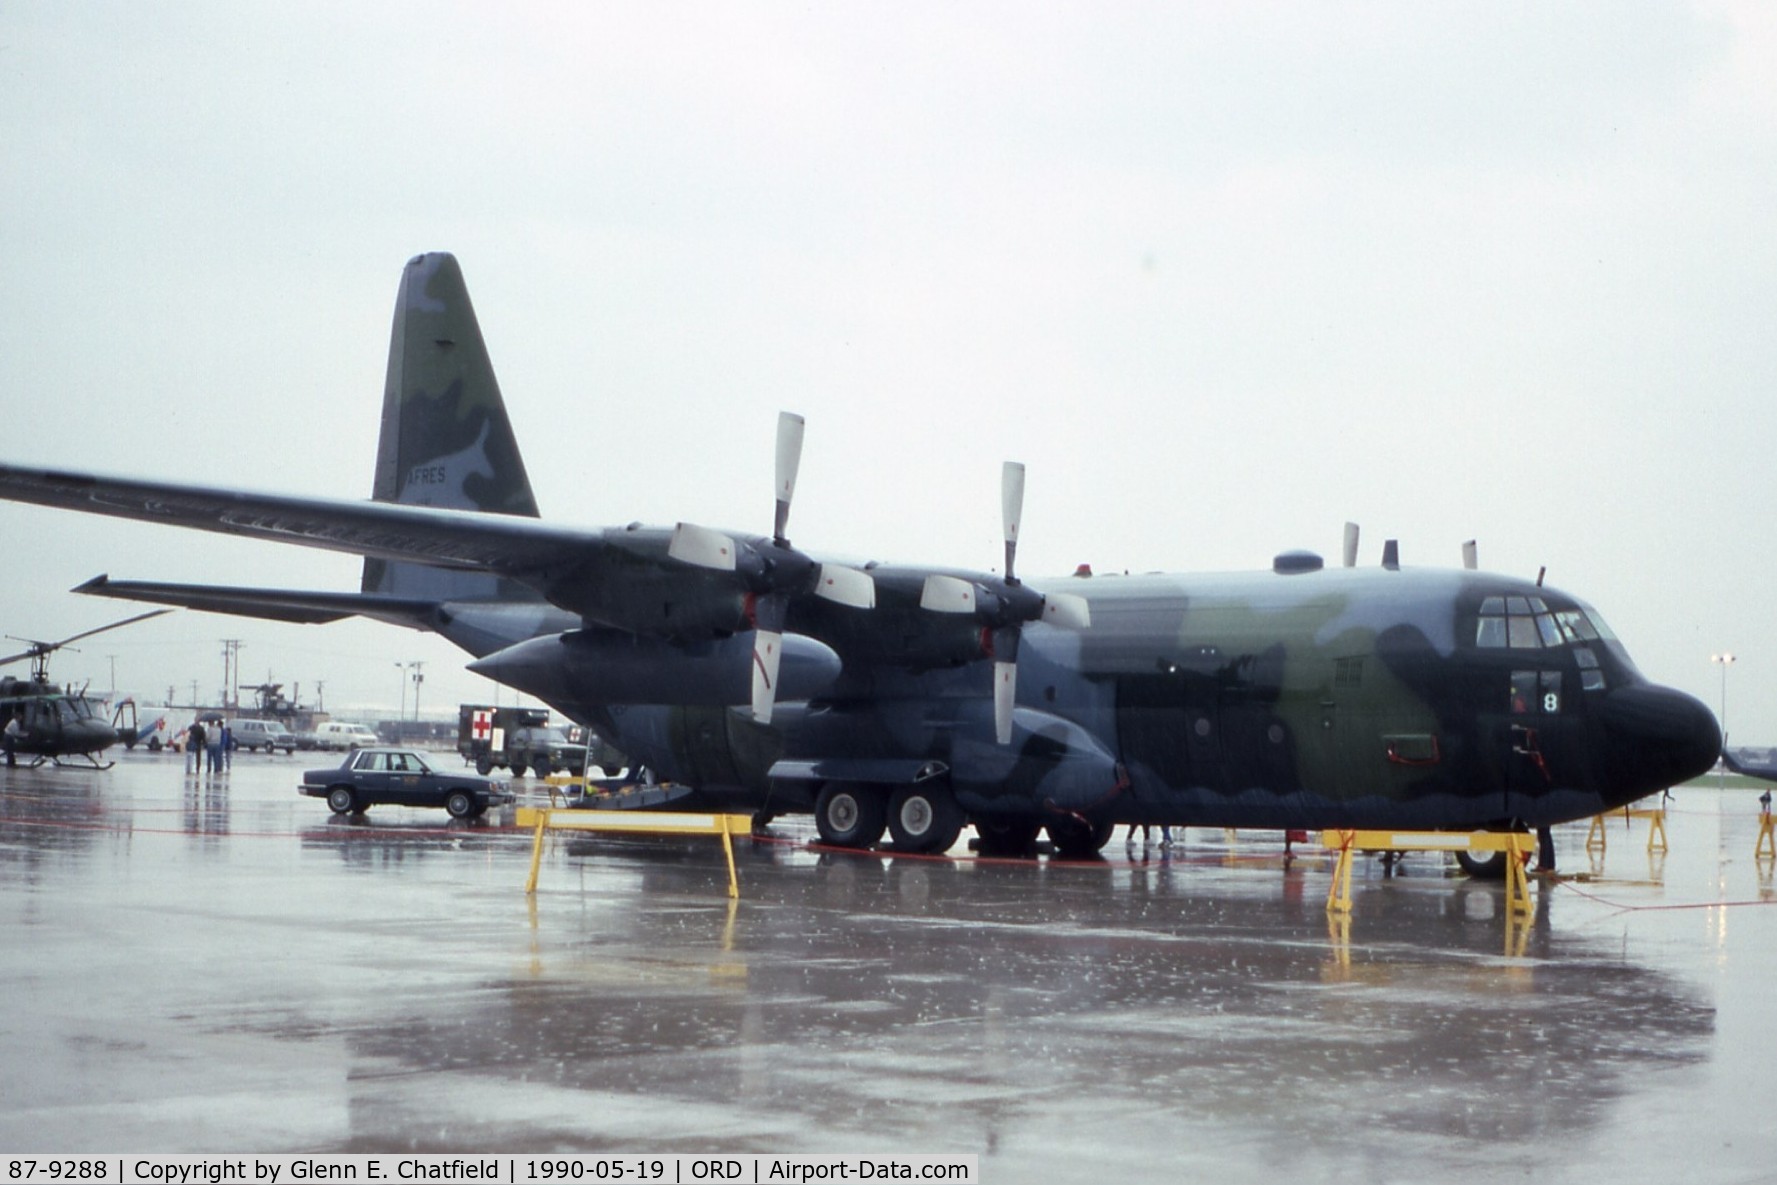 87-9288, 1987 Lockheed C-130H Hercules C/N 382-5129, C-130H from Air Force Reserve